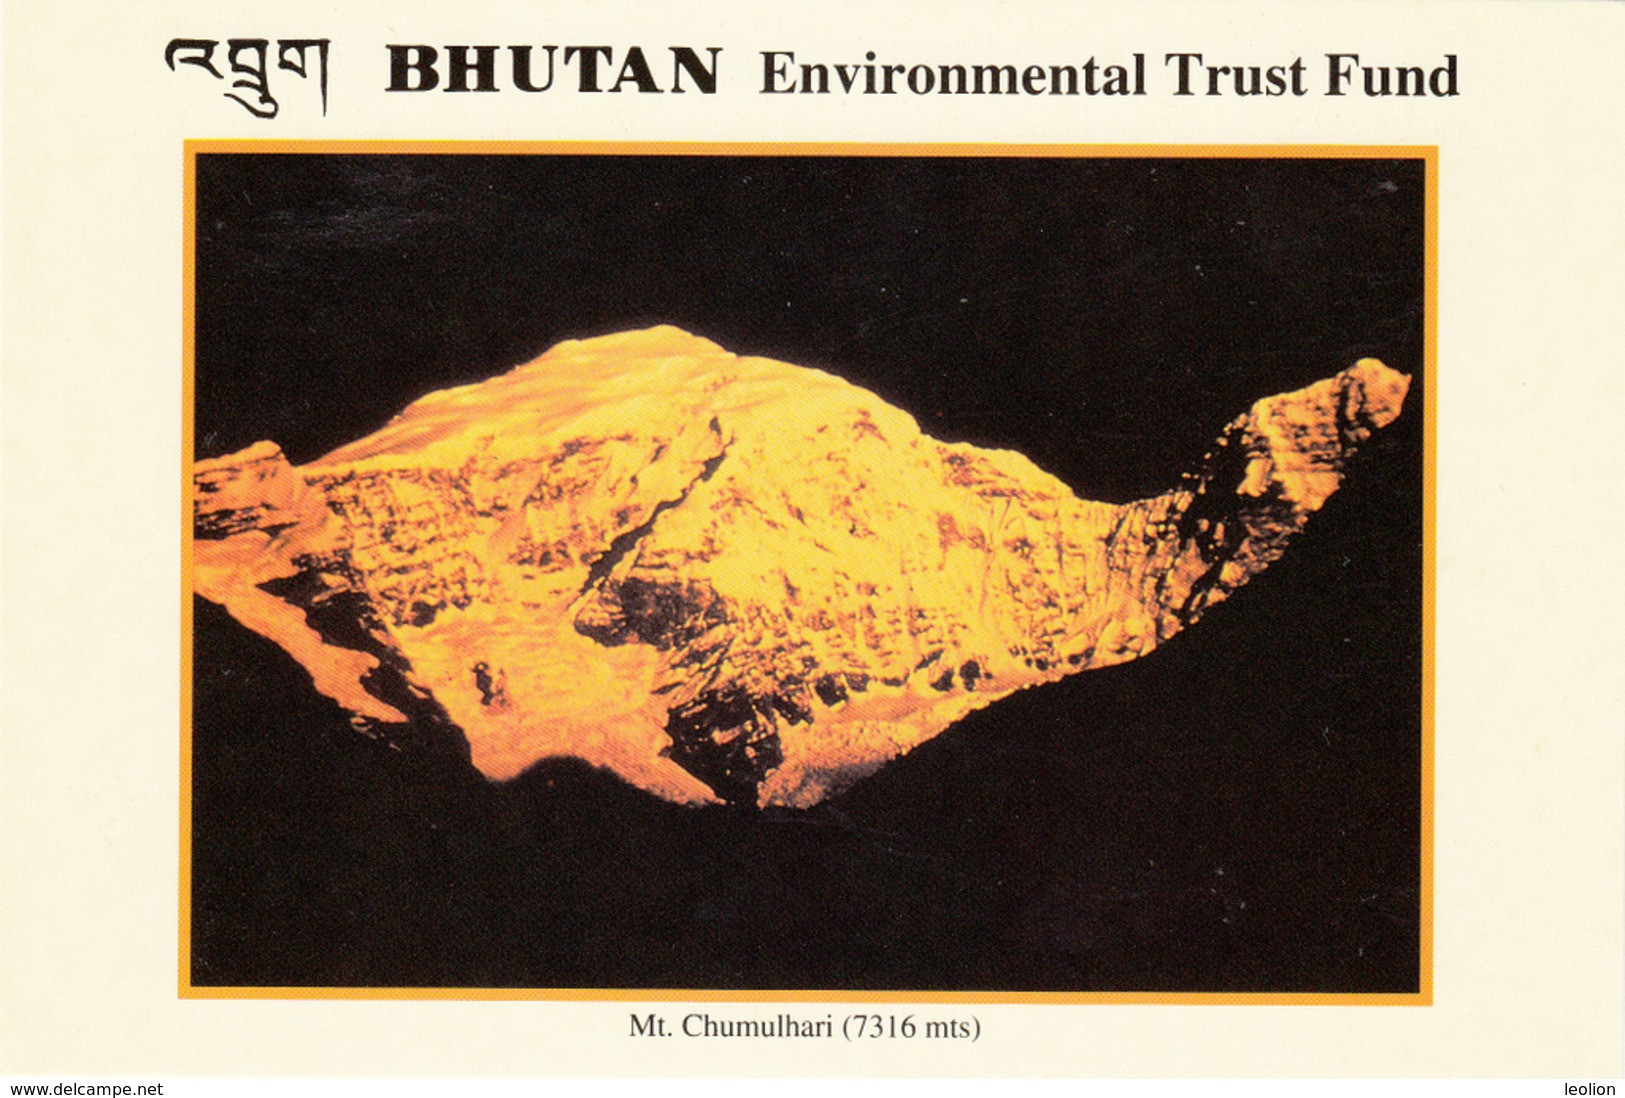 BHUTAN Post 1993 set of 17 Environmental Trust Fund Postcards, unused in cover